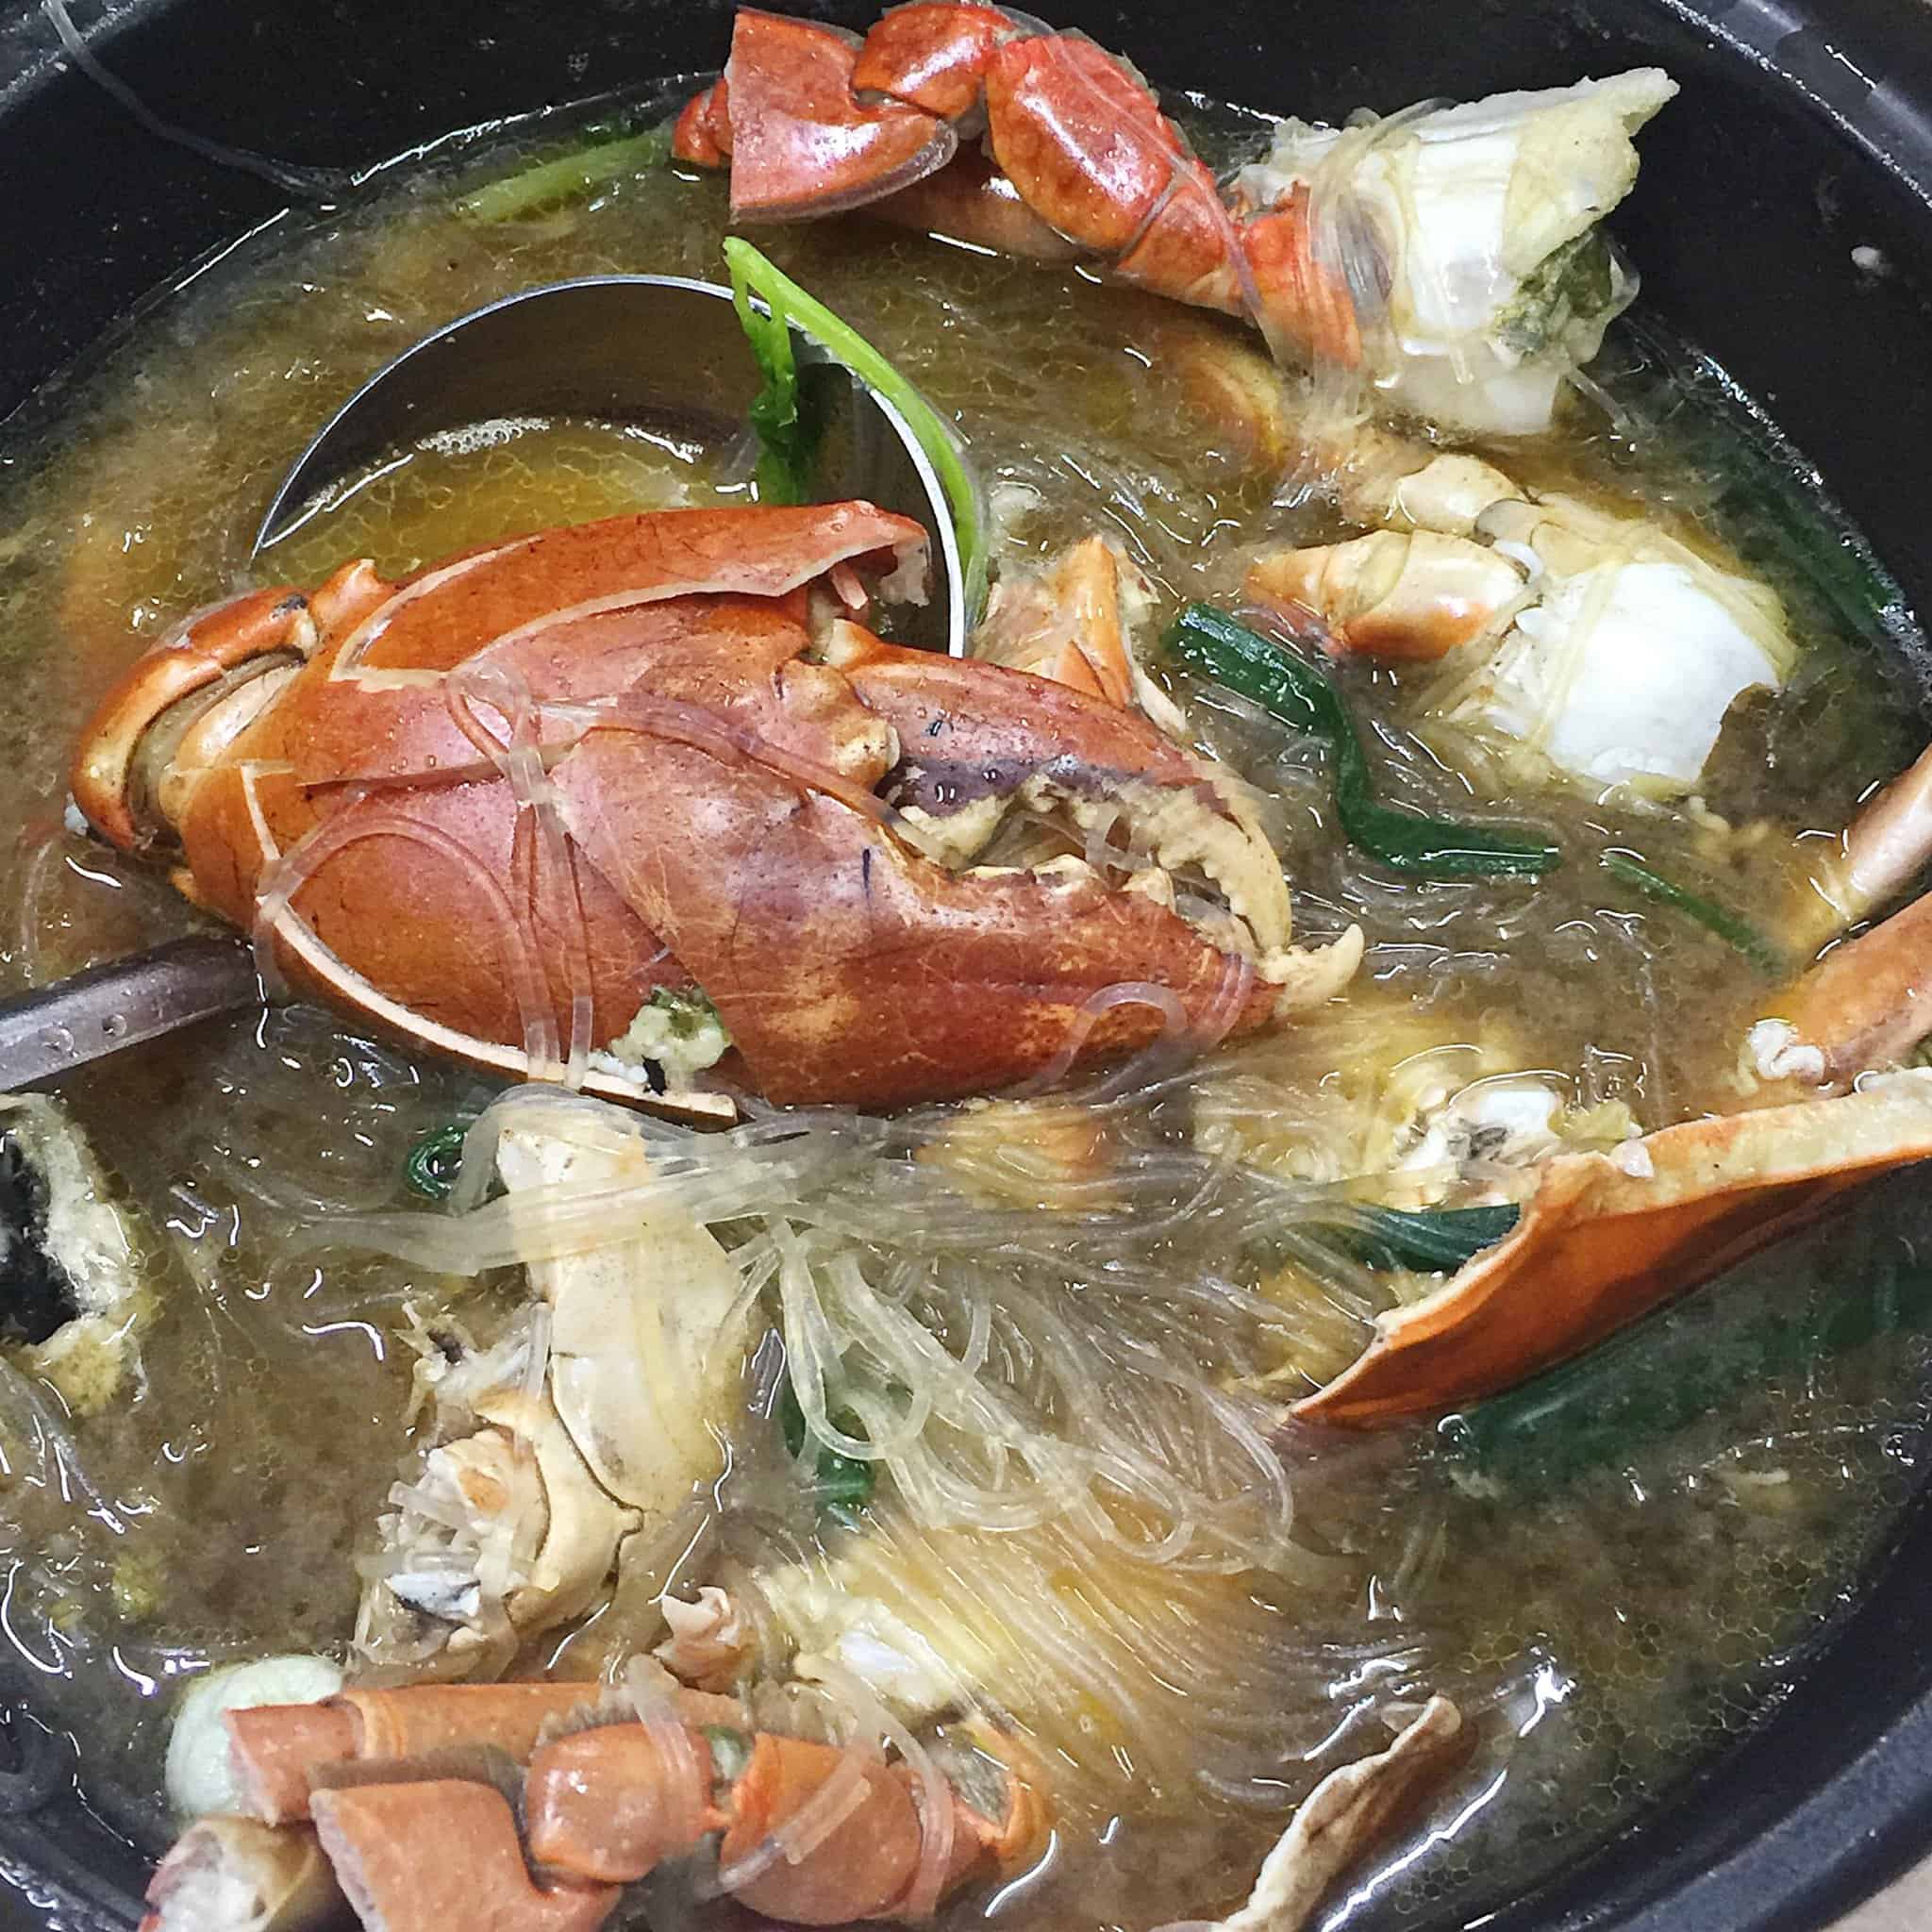 Ipoh Best Restaurants For Dinner Part I Kedai Makanan Rasa Lain Bercham Claypot Crab Fishballs Rebecca Saw